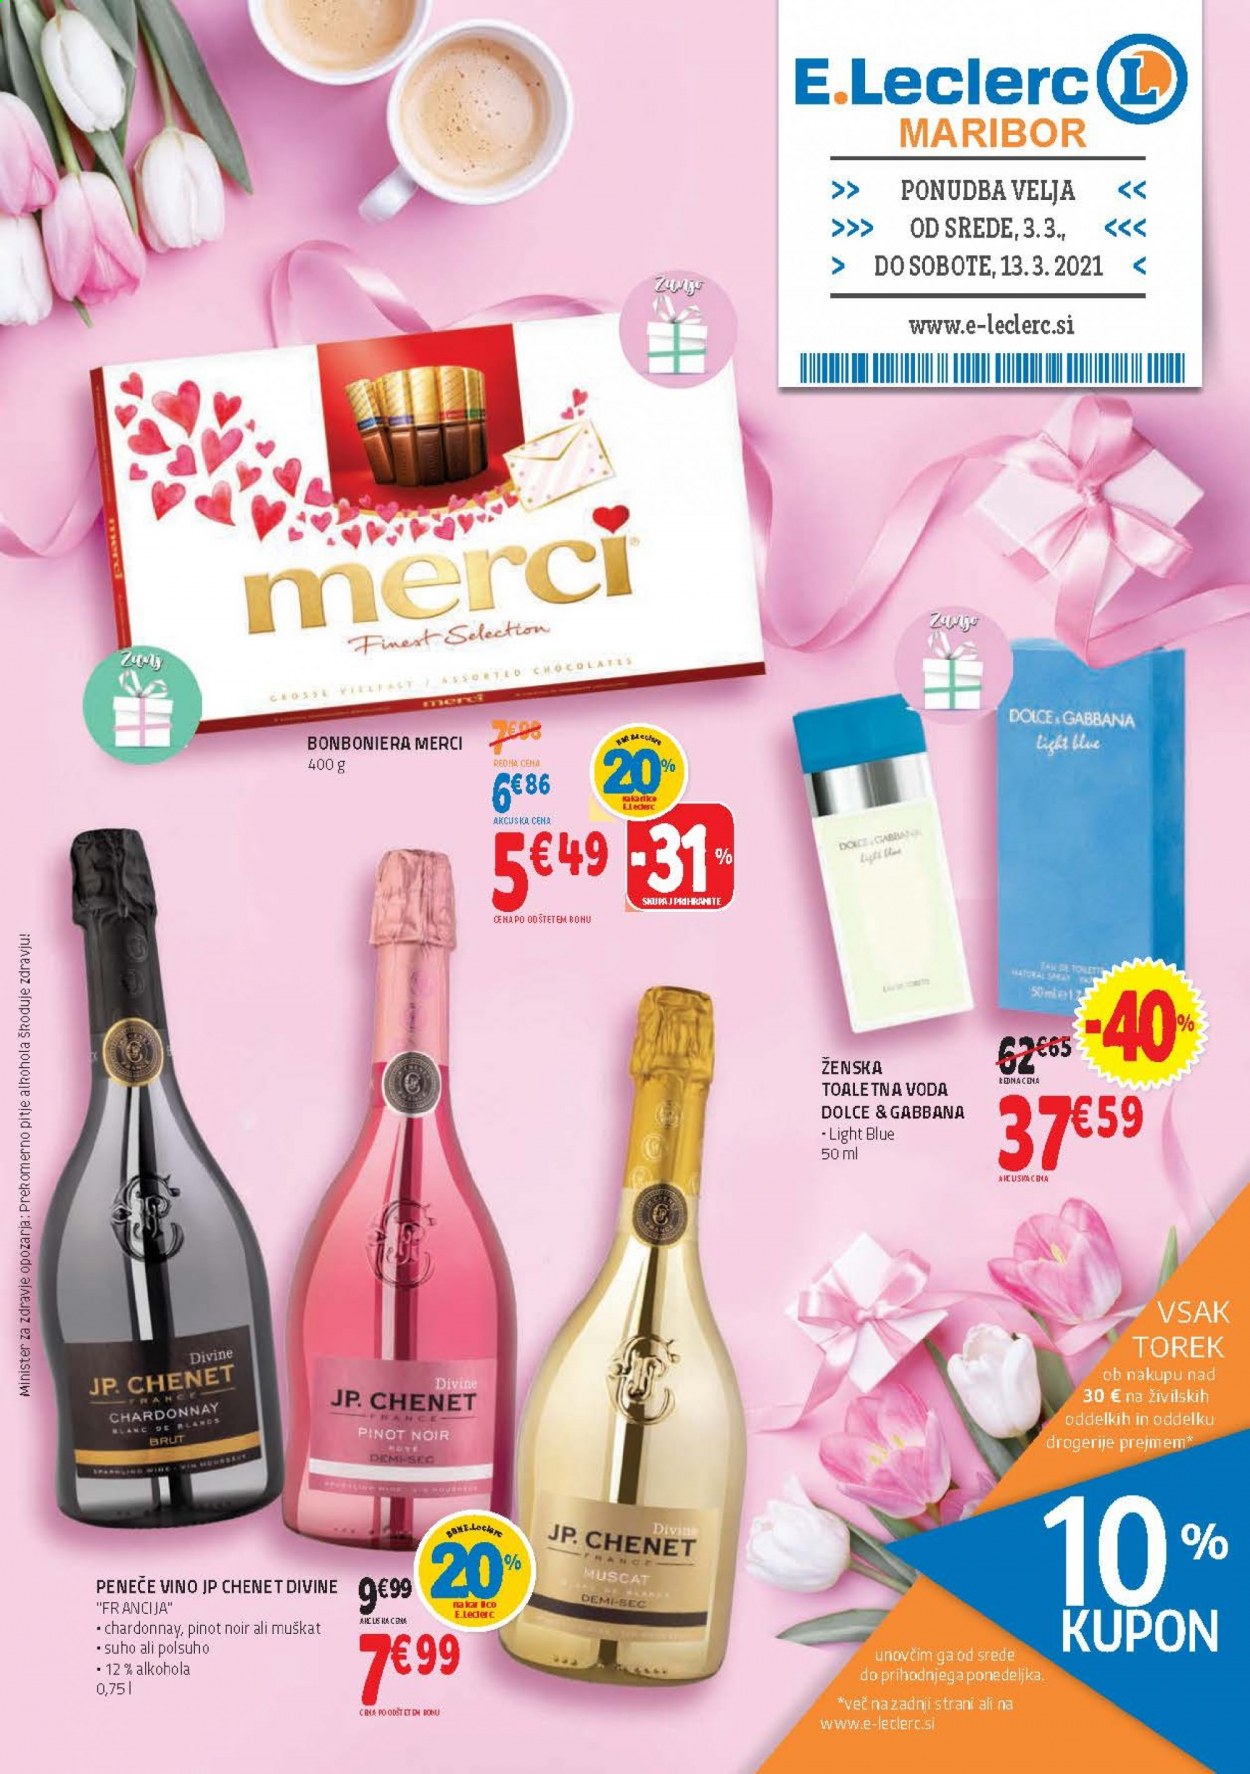 thumbnail - E.Leclerc katalog - 3.3.2021 - 13.3.2021 - Ponudba izdelkov - Chardonnay, Muškat, pinot, vino, Dolce & Gabbana. Stran 1.